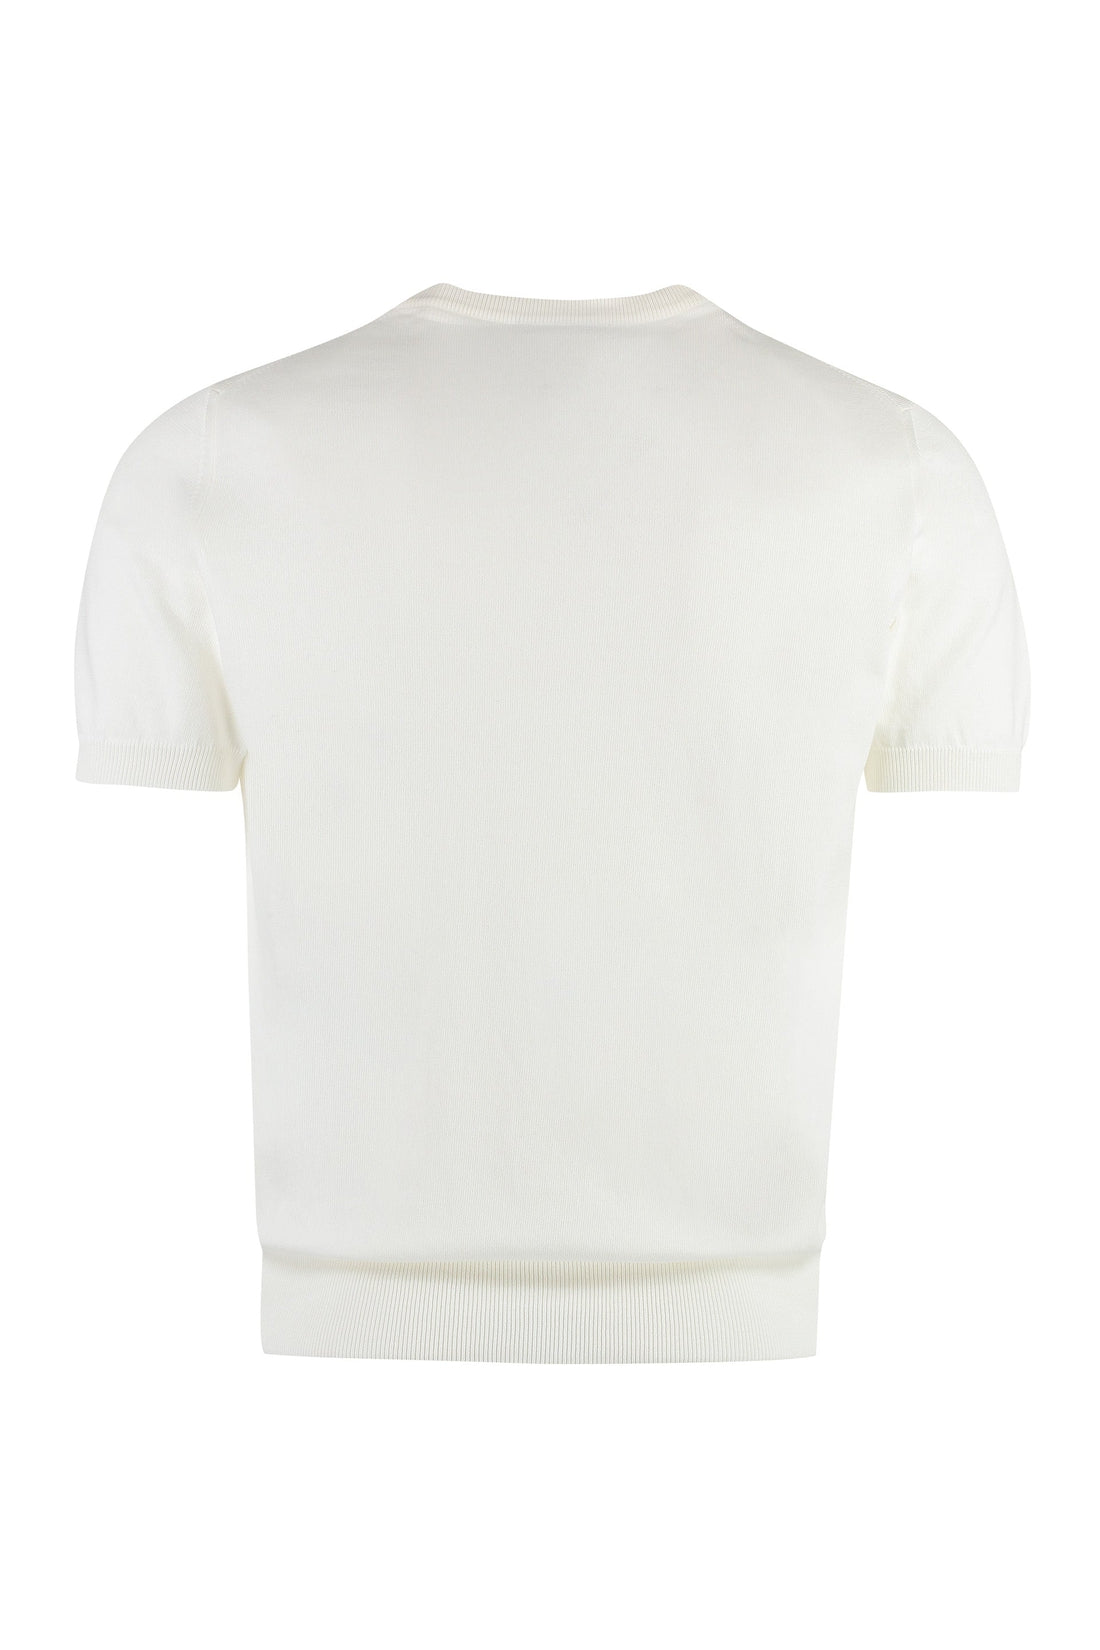 Canali-OUTLET-SALE-Cotton short sleeve sweater-ARCHIVIST